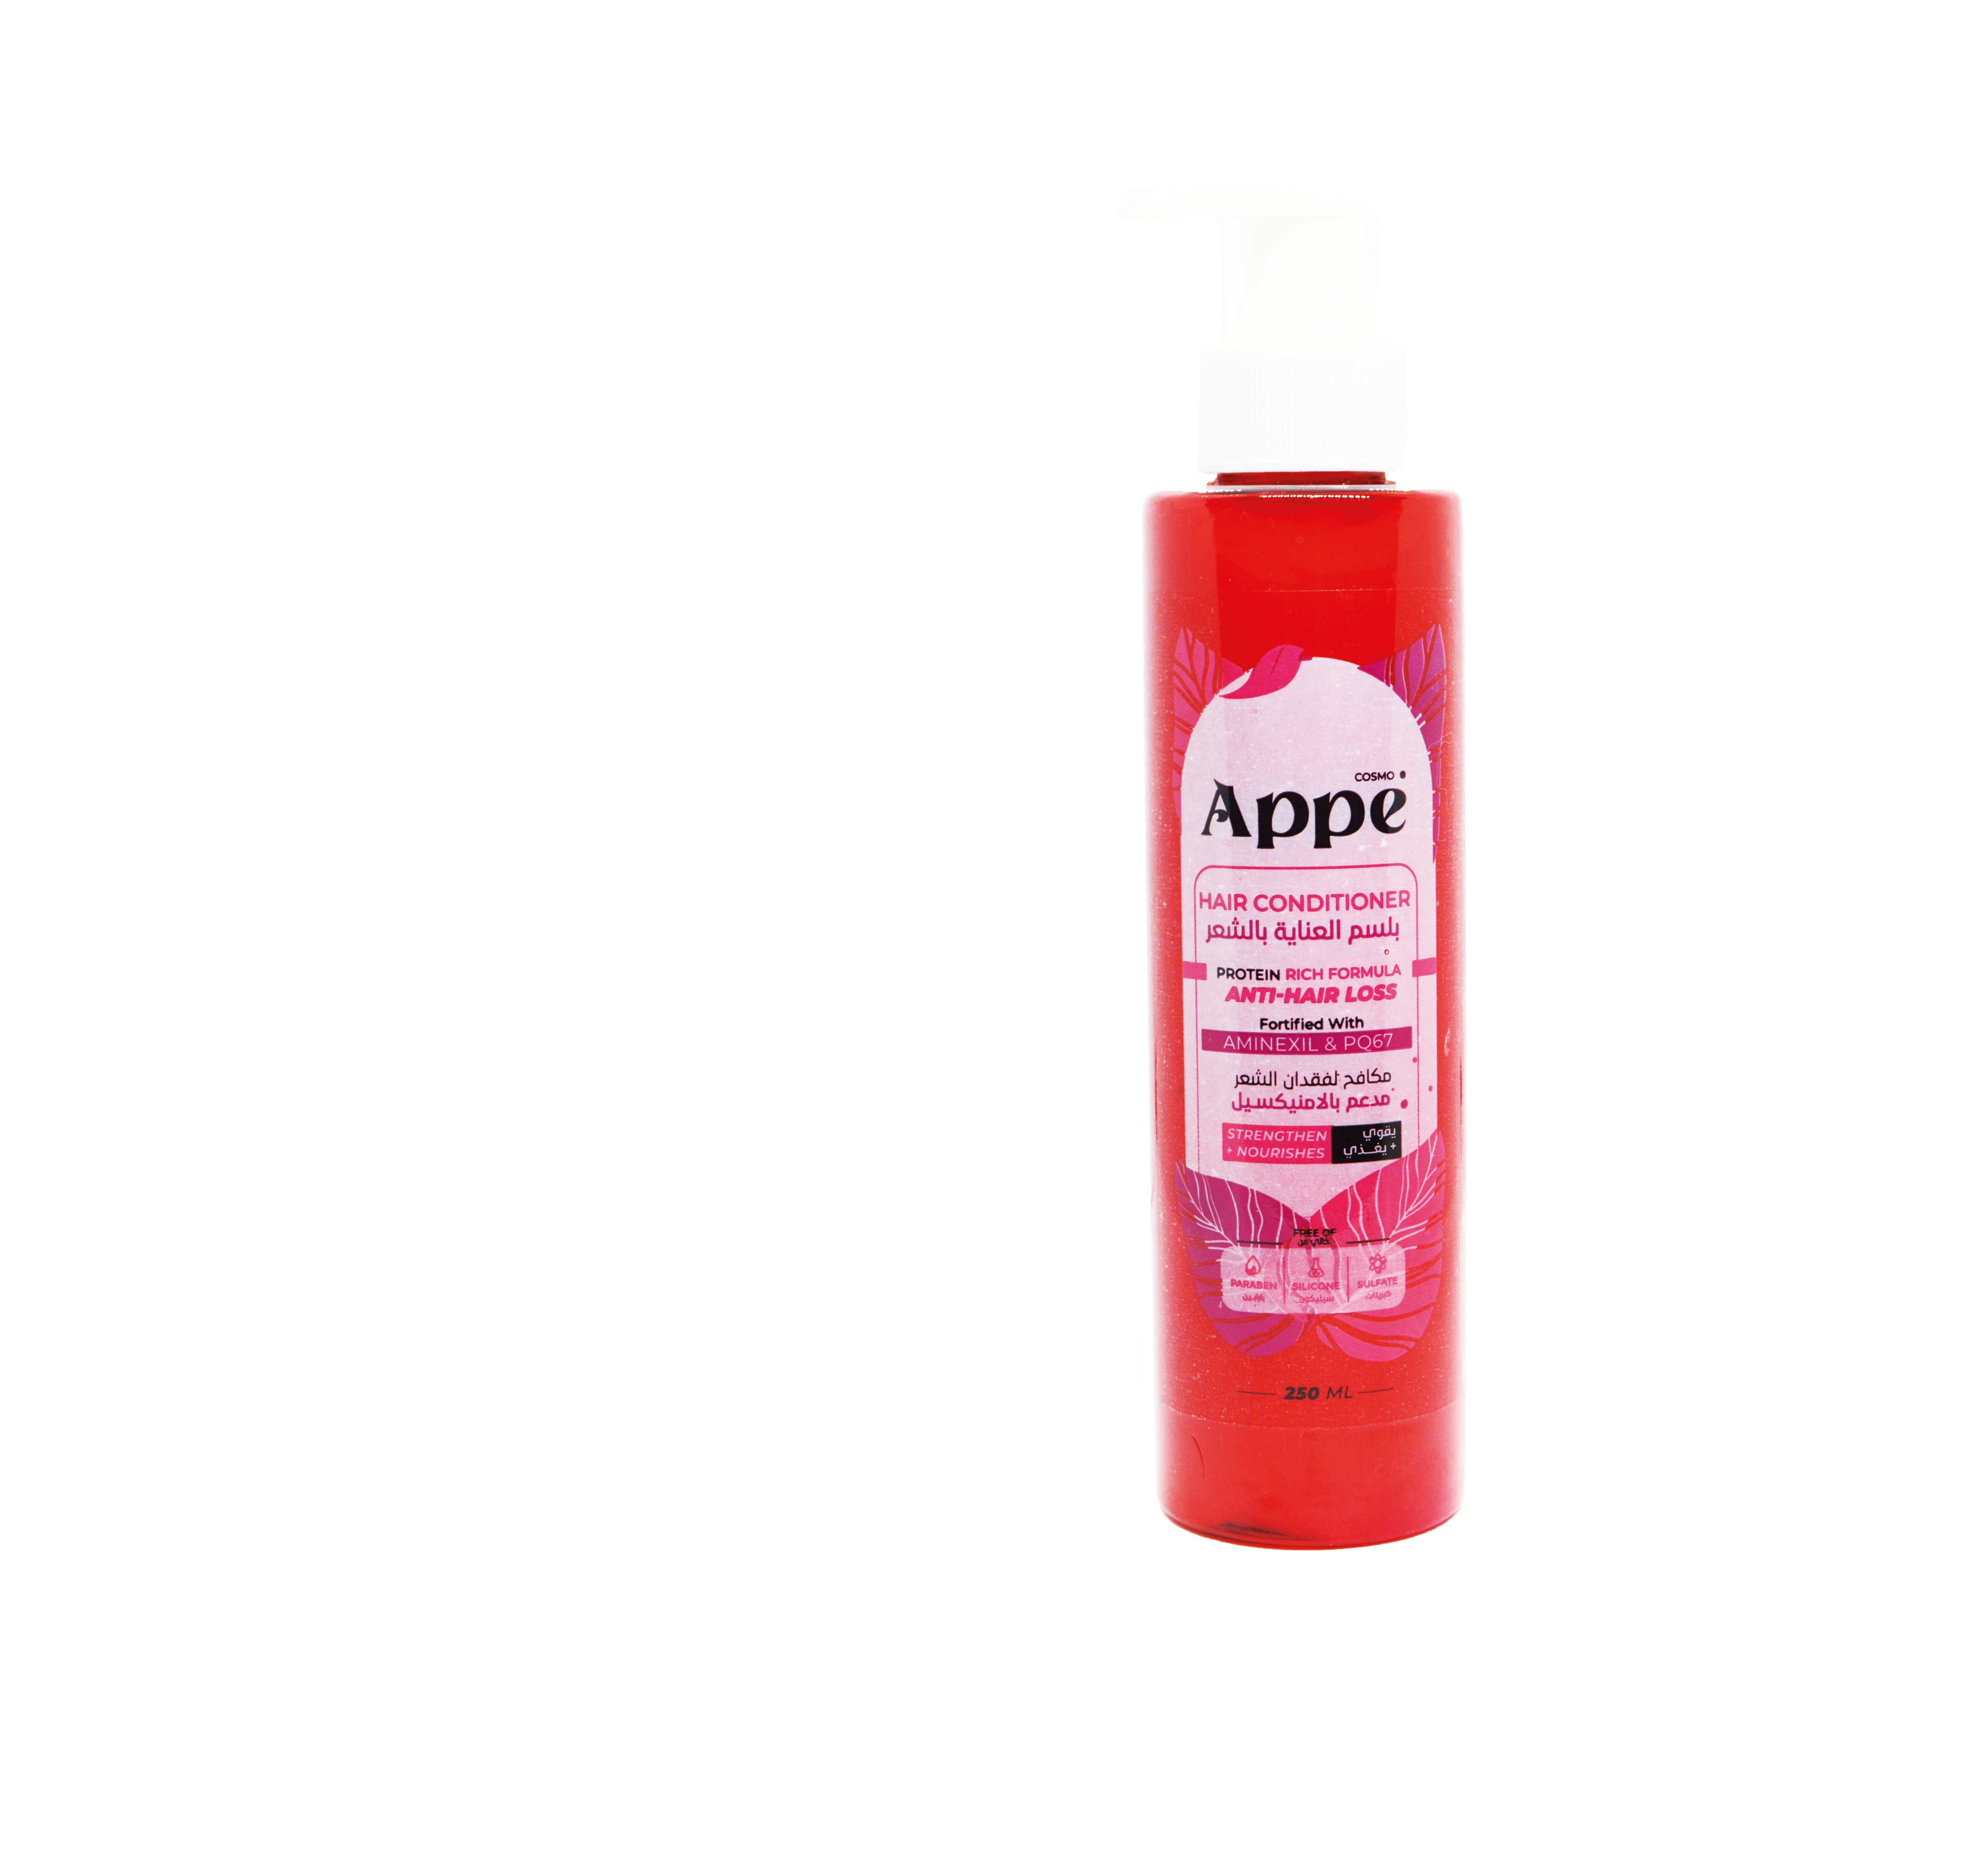 COSMO APPE Hair Conditioner 250 ml بلسم للترطيب الفورى وعلاج للتساقط